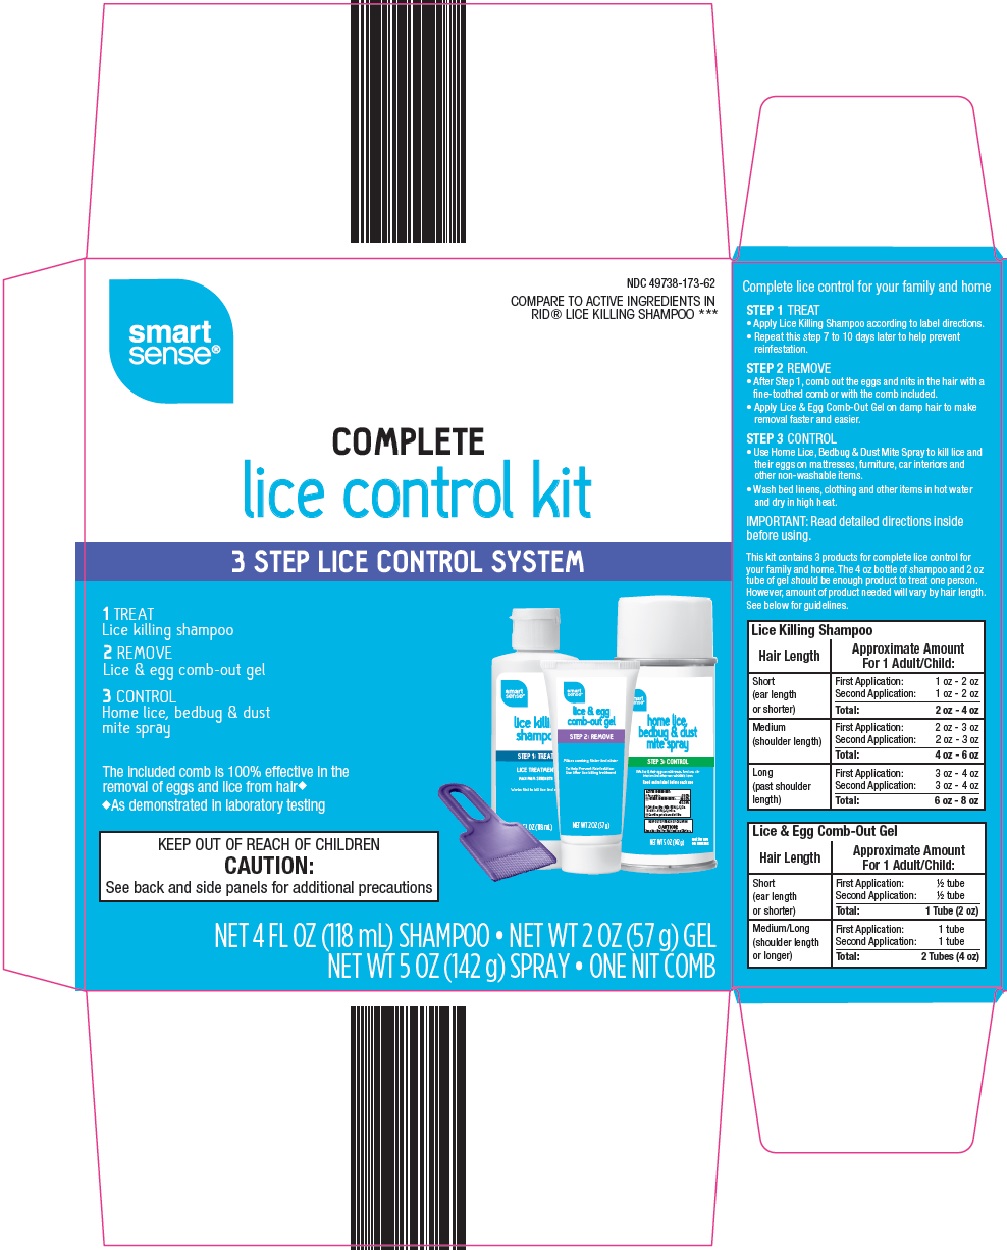 lice control kit image 1